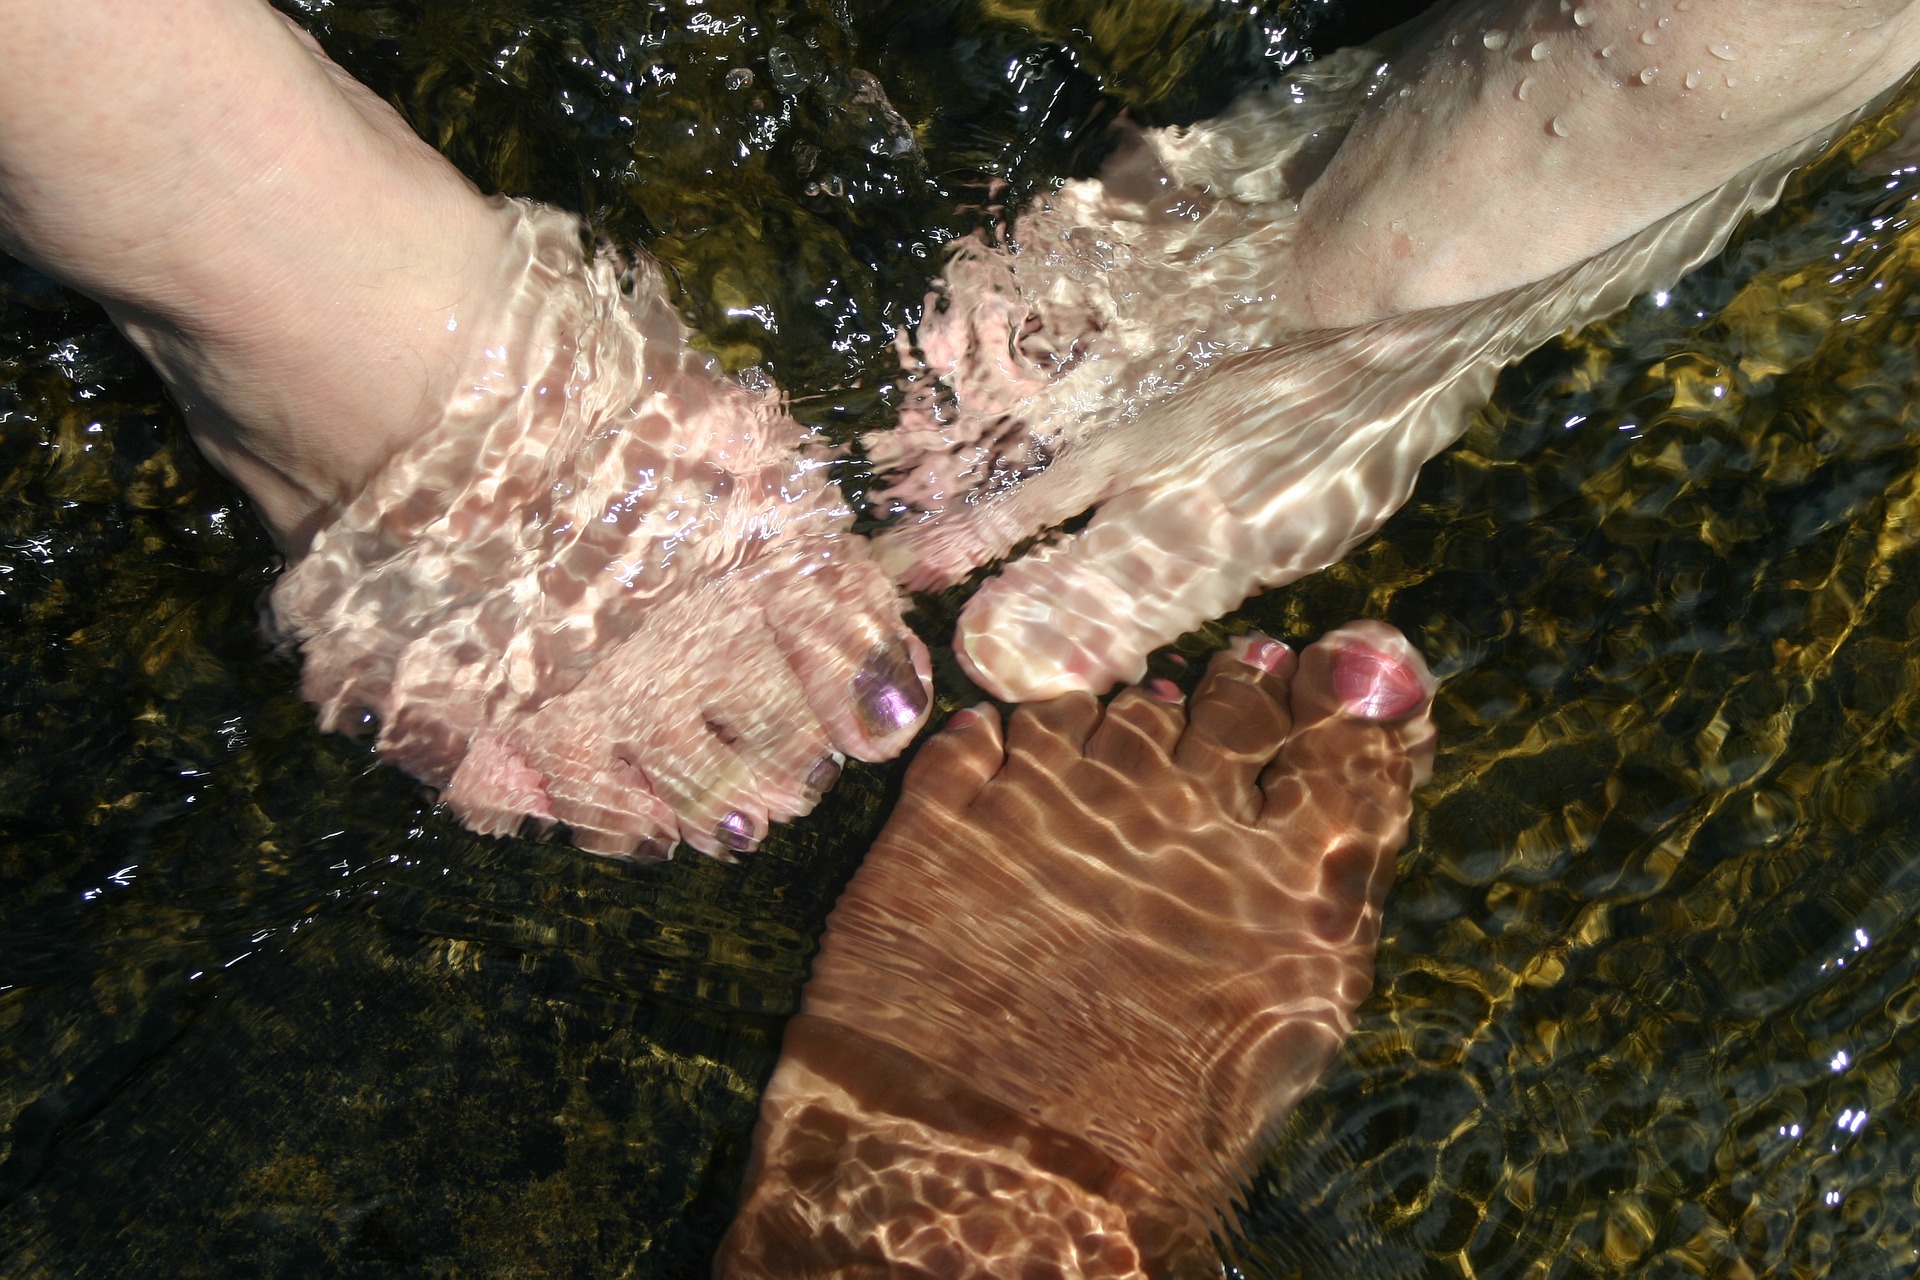 feet underwater with painted toenails